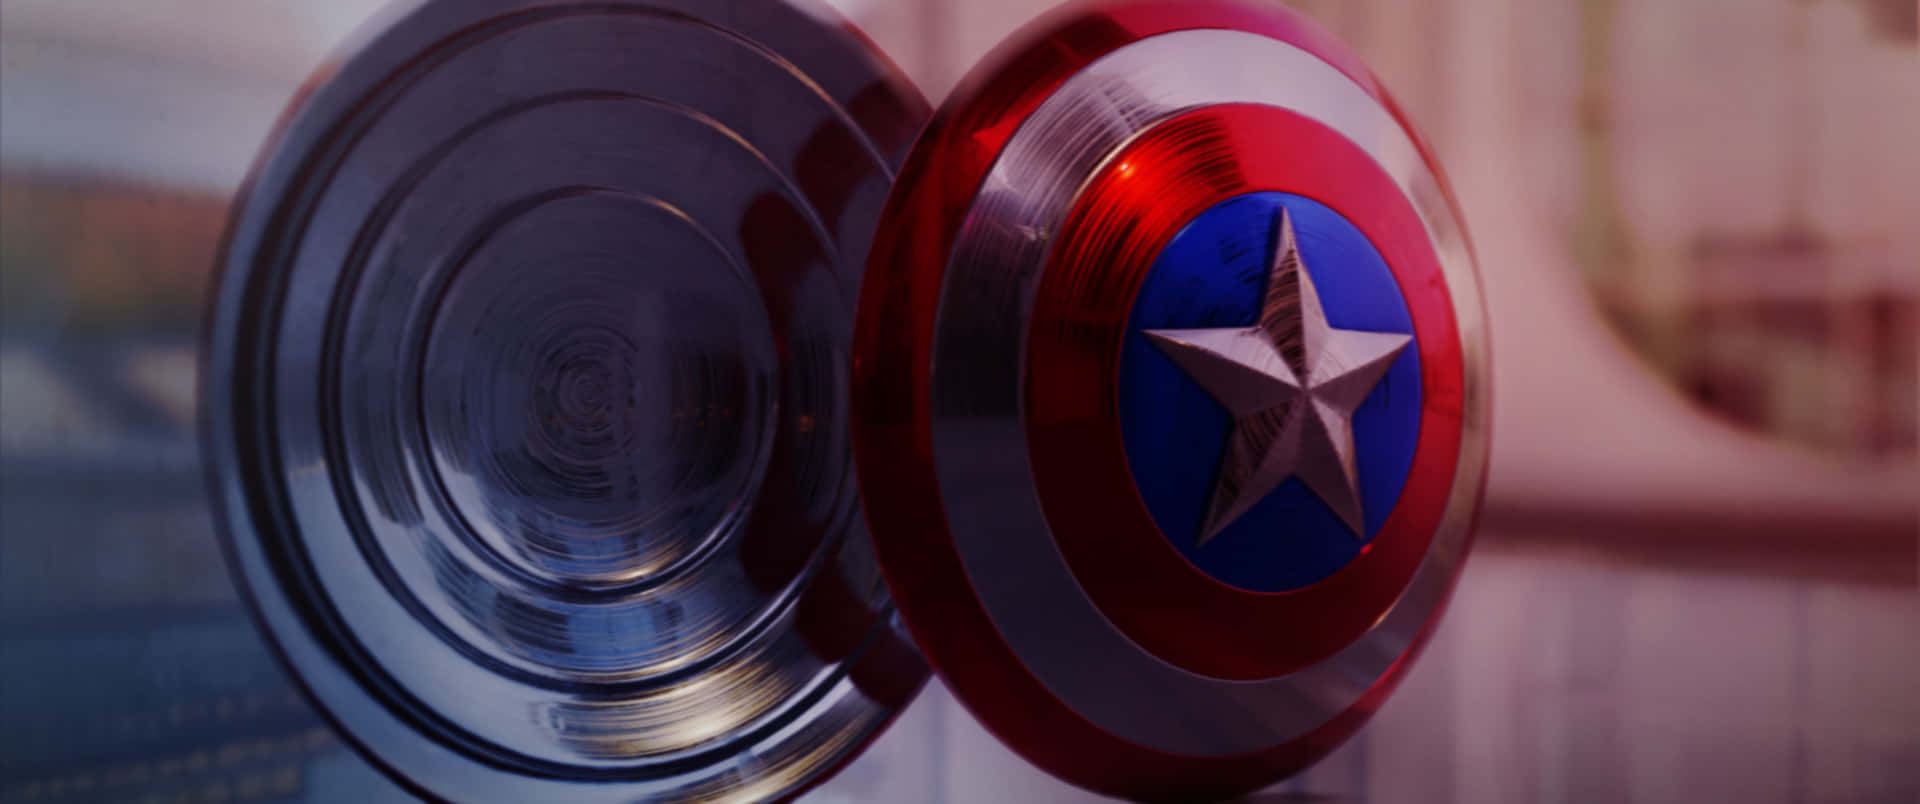 Captain America shield at 3440x1440p